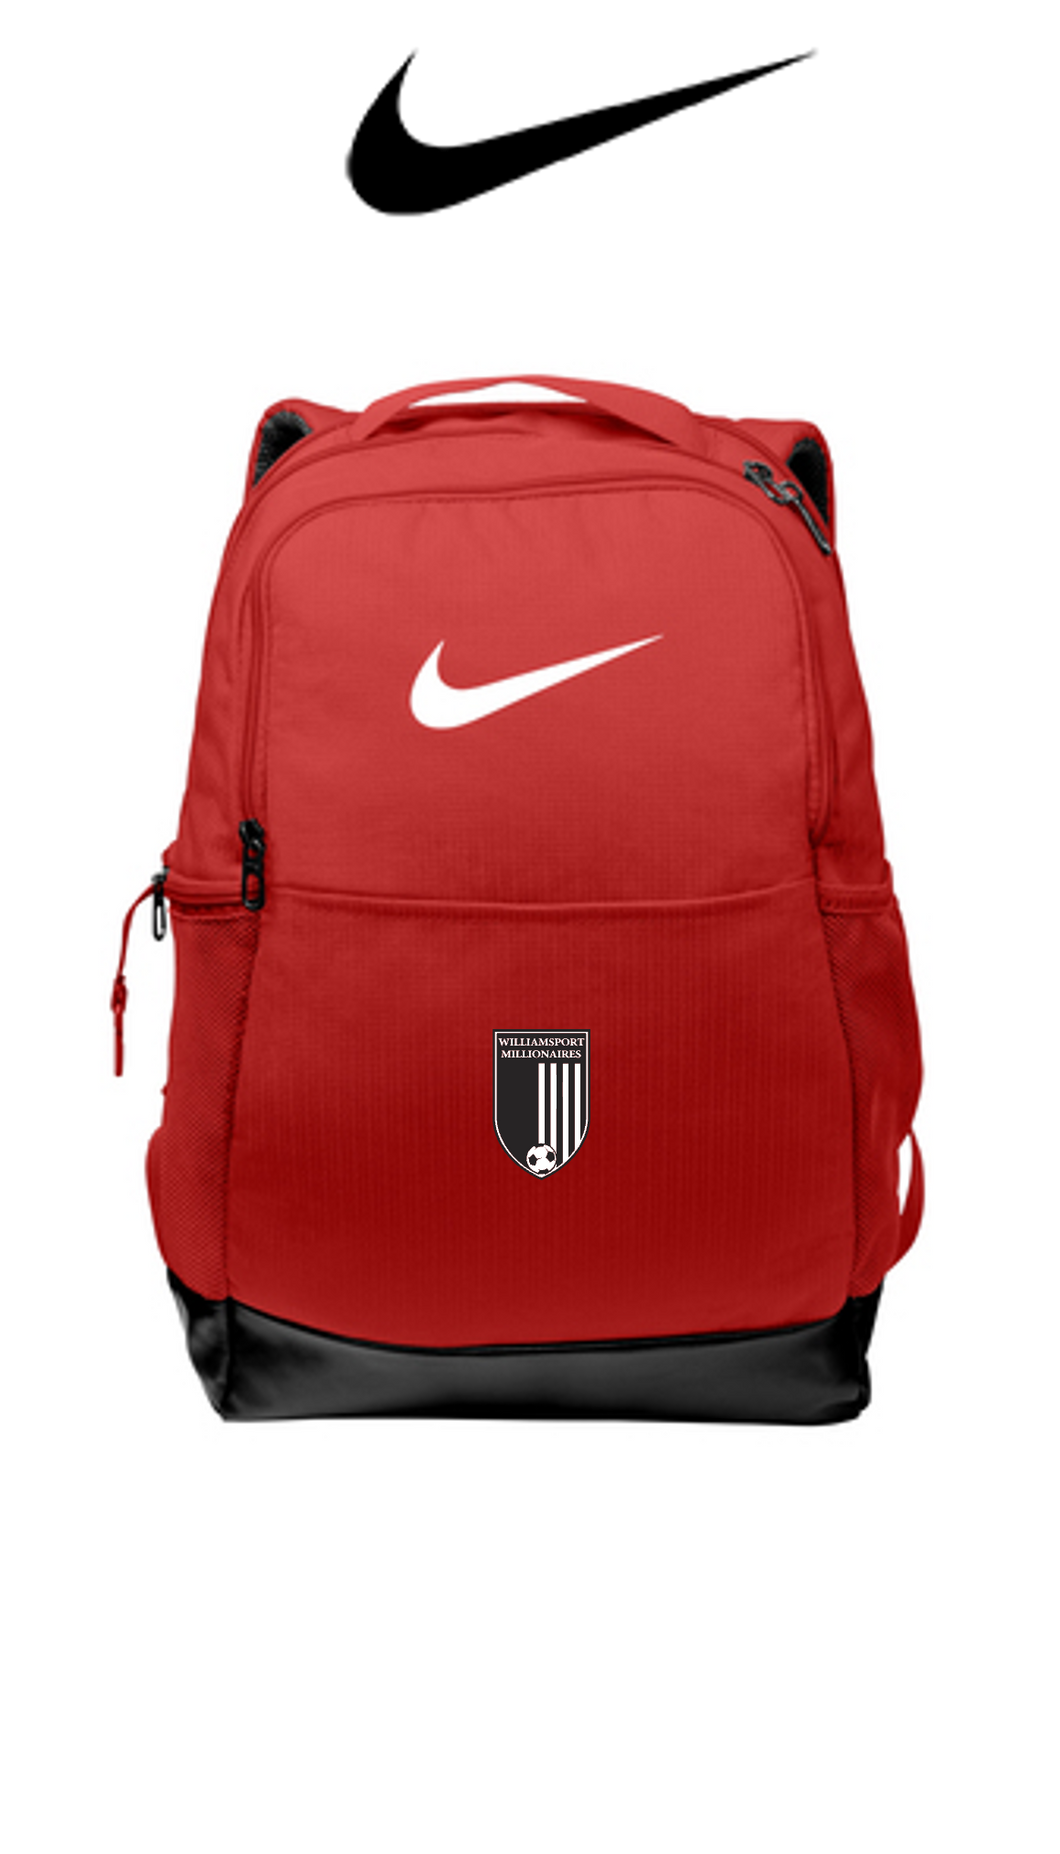 *Nike Brasilia Medium Backpack - Williamsport Area Soccer